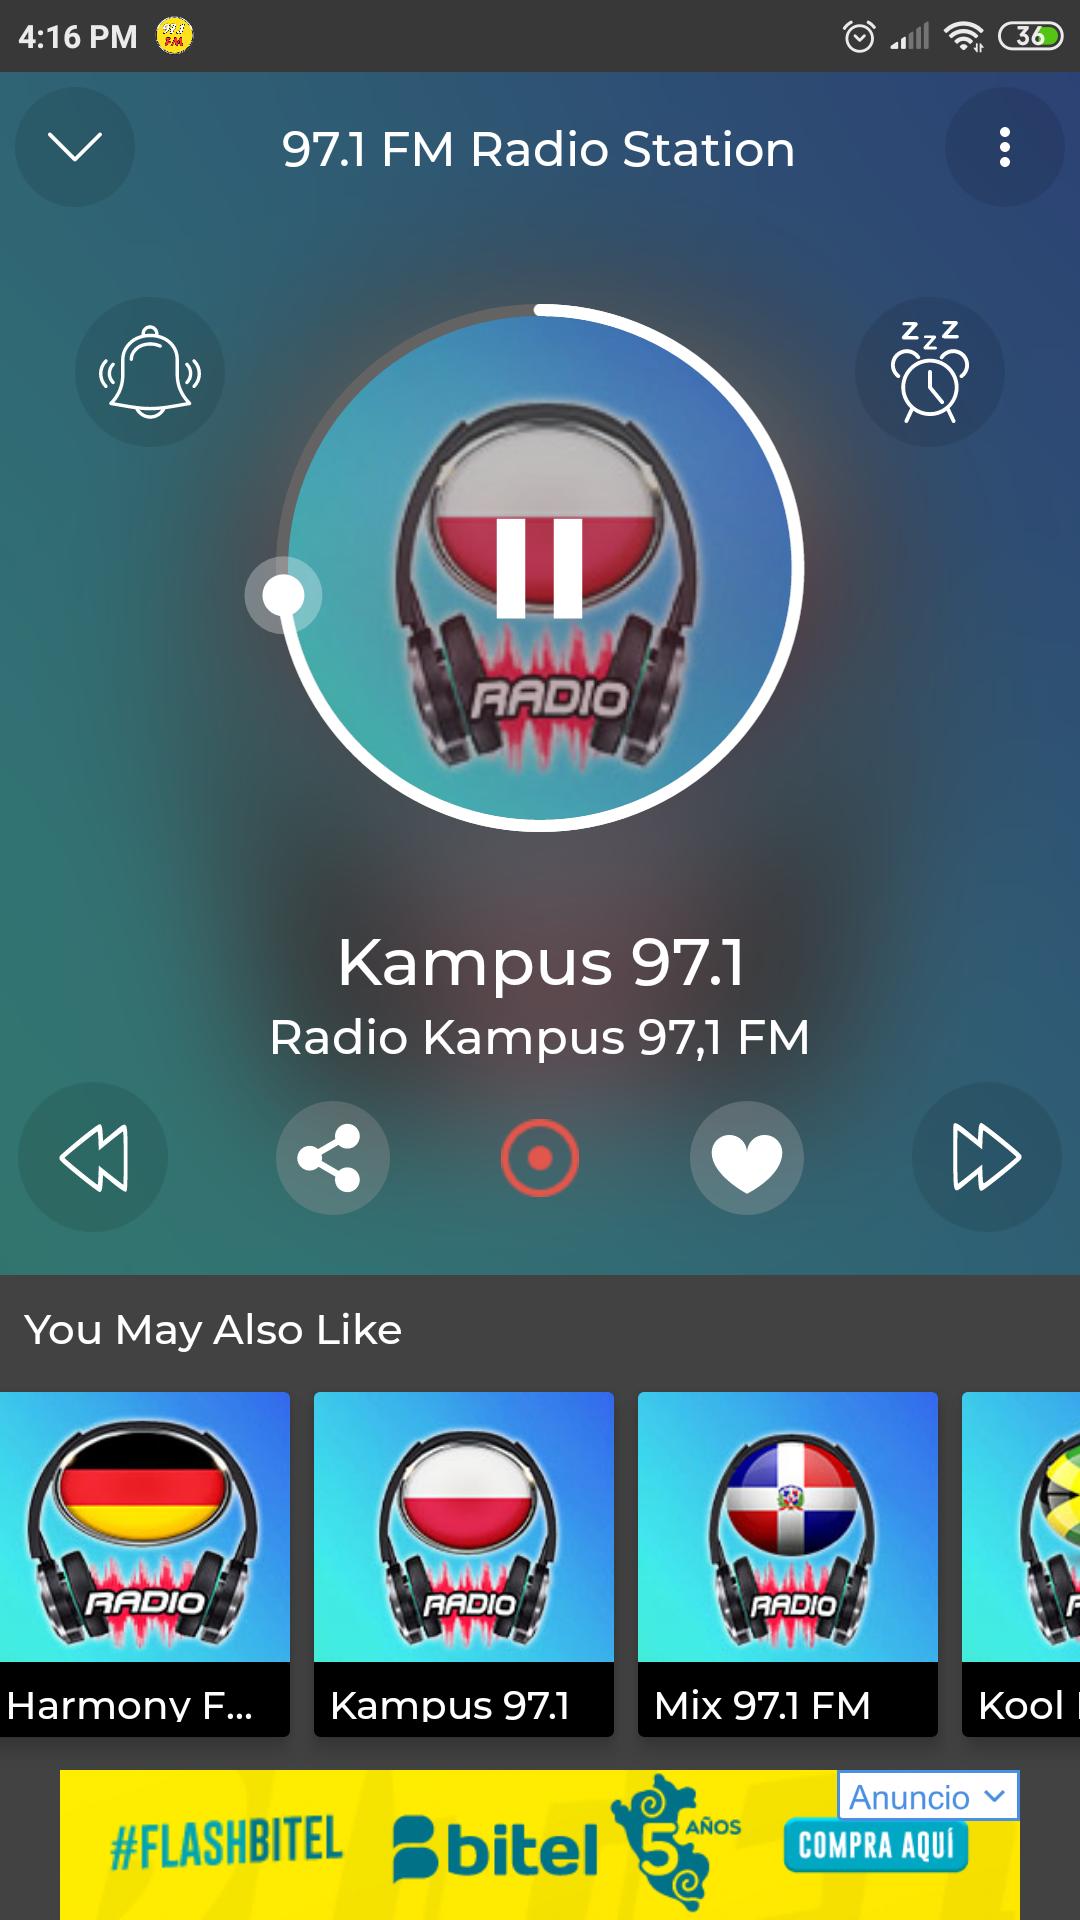 radio 97.1 fm radio station for Android - APK Download